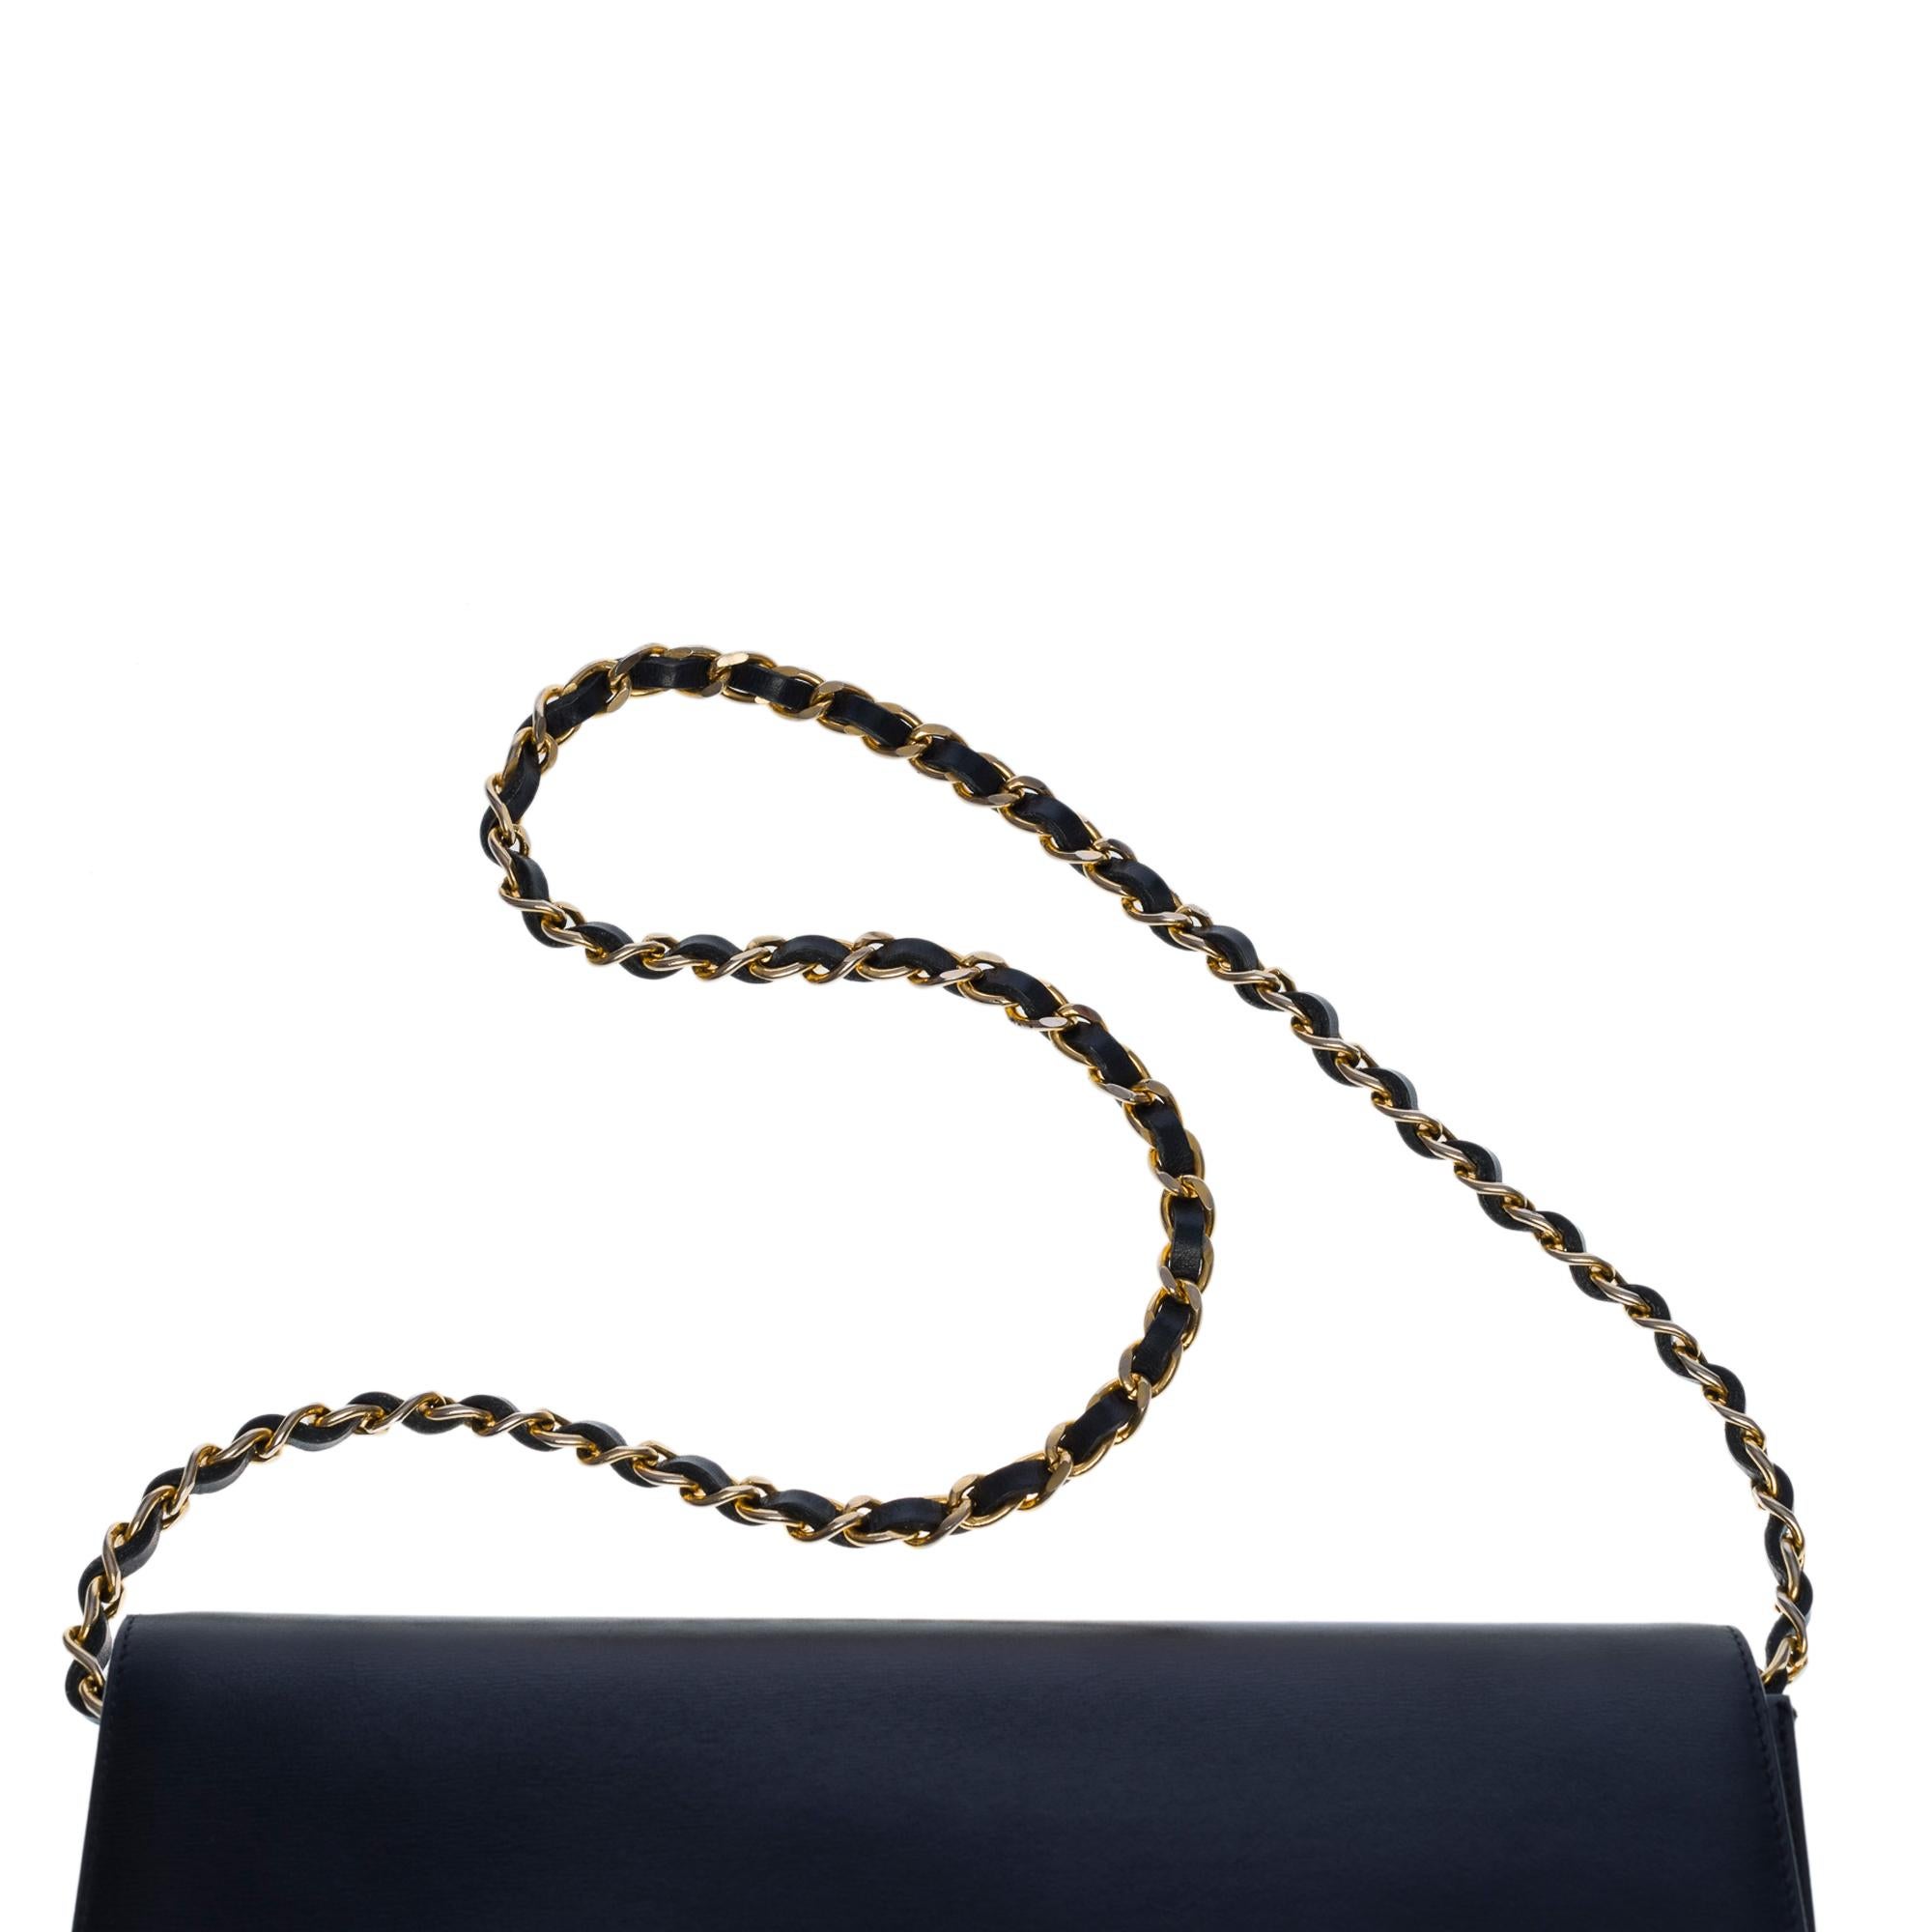 Rare Chanel Classic shoulder flap bag in Navy blue box calfskin, GHW 2